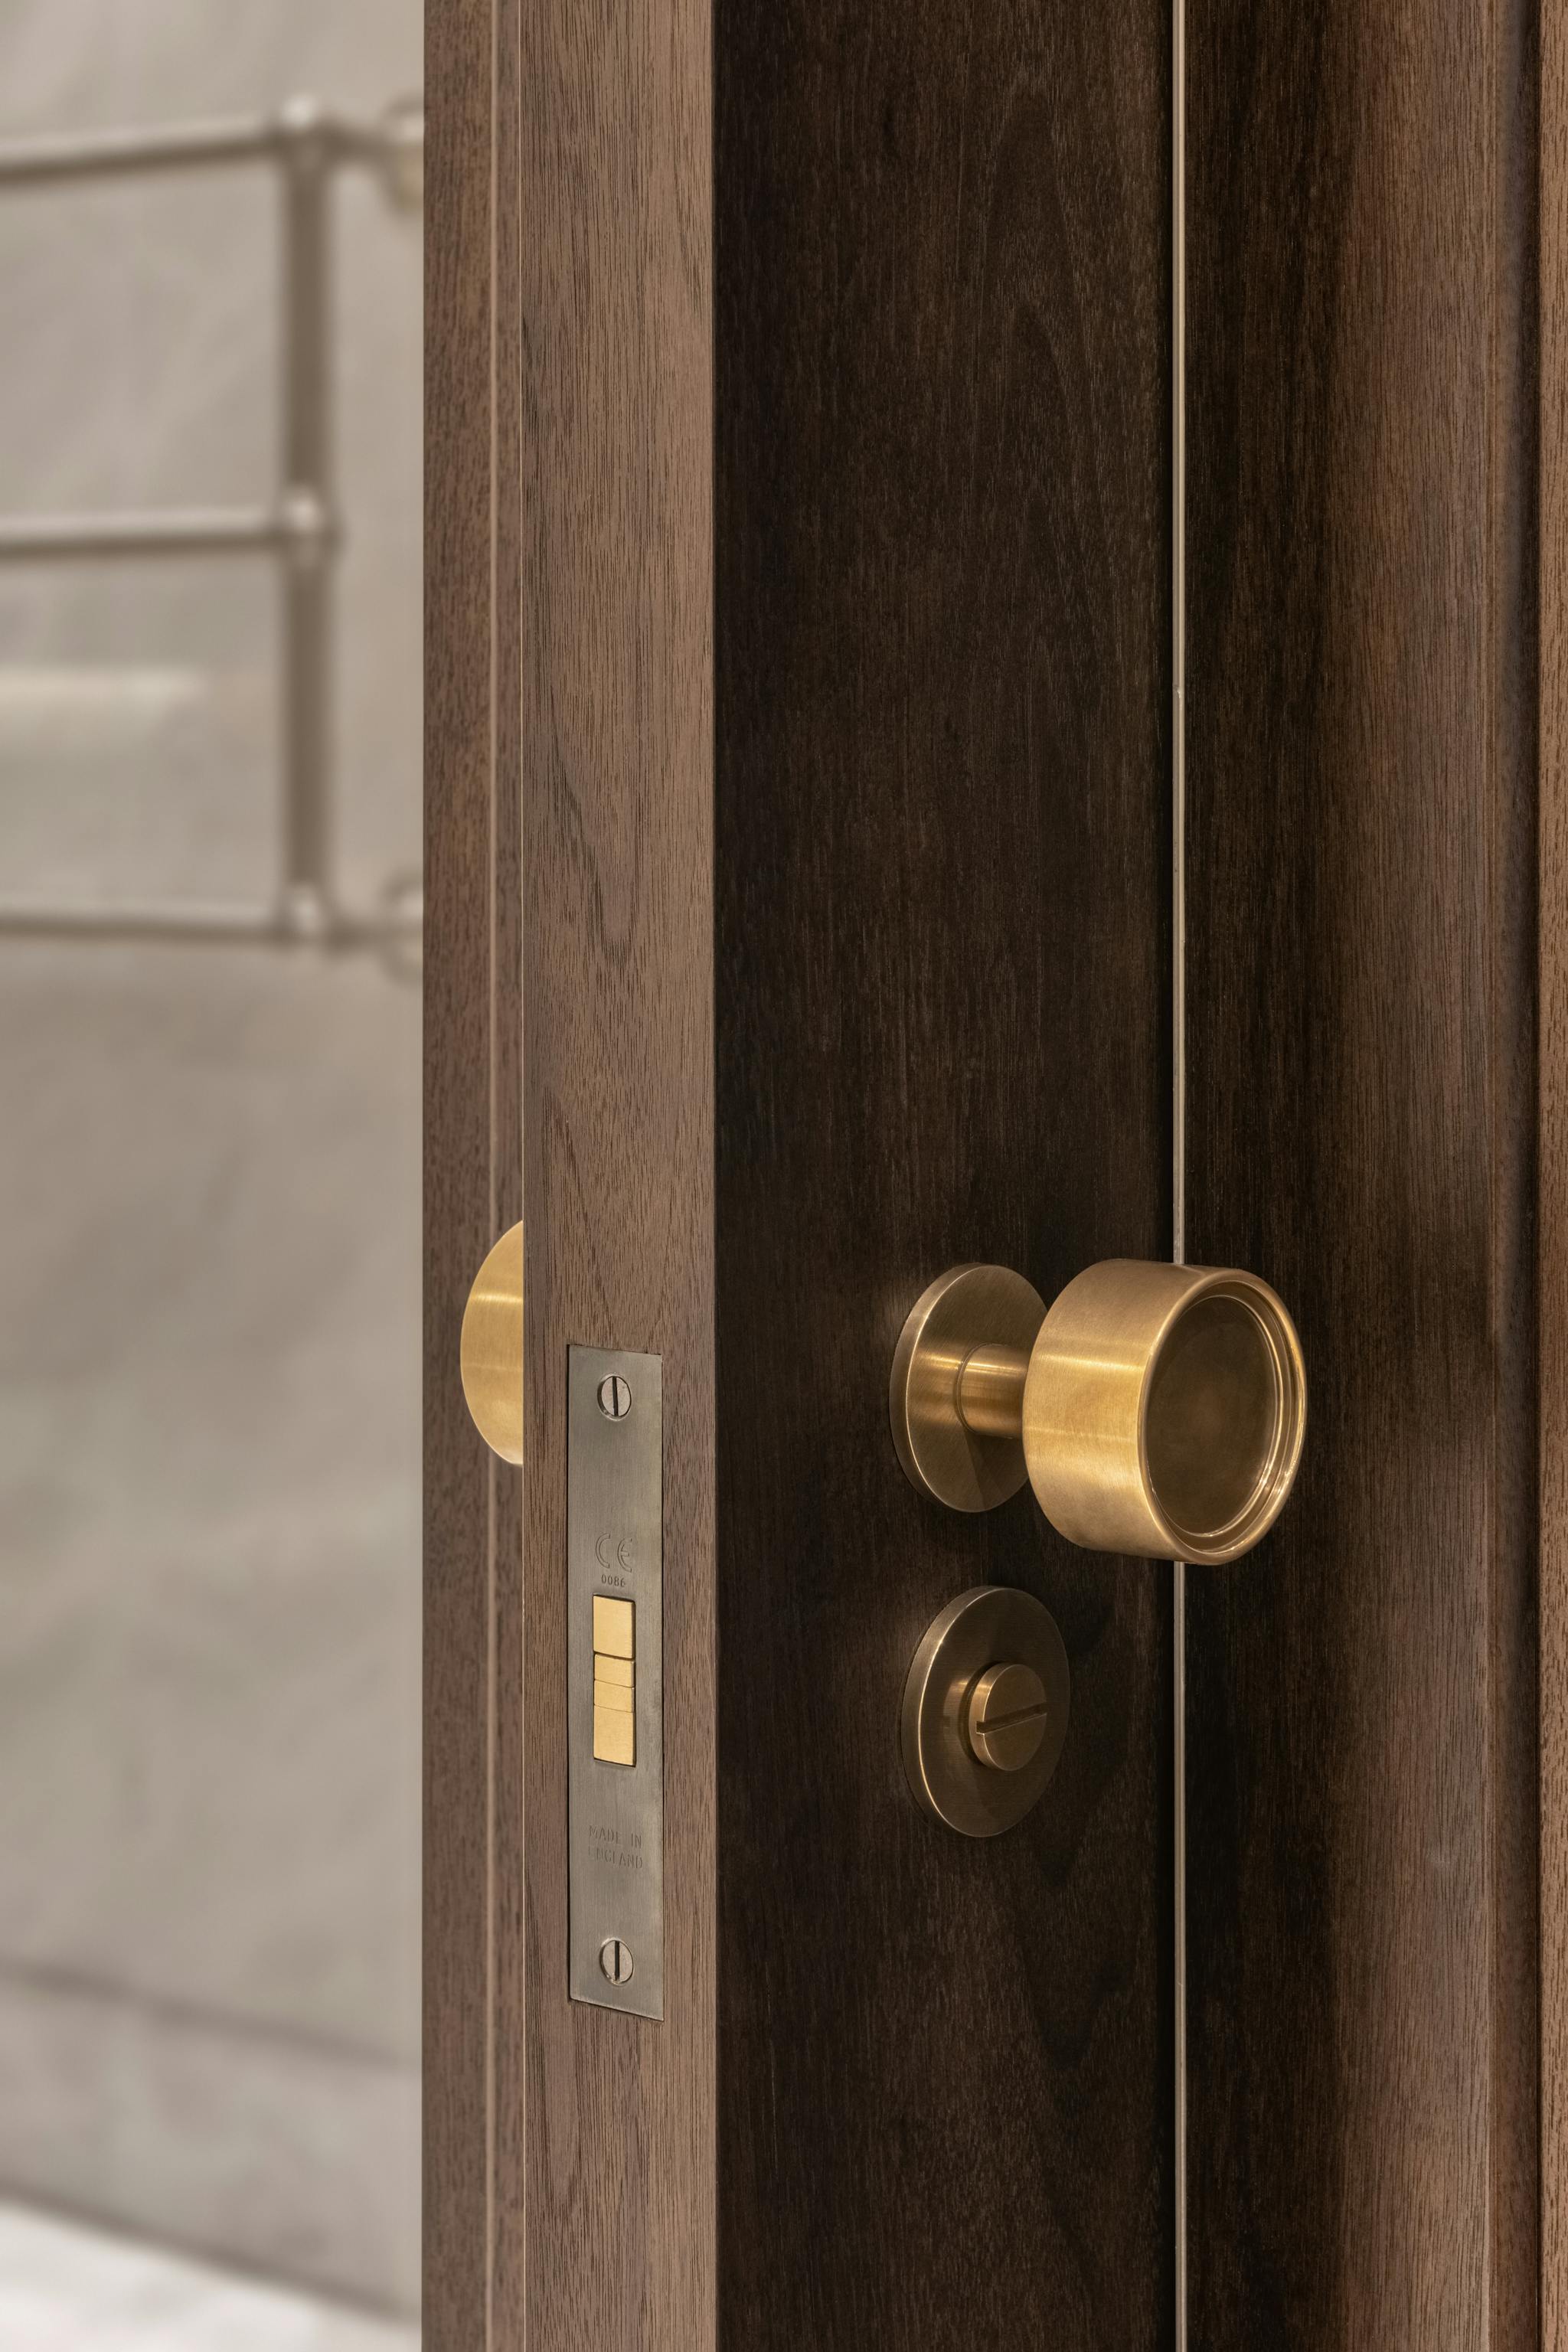 Solid brass hardware on a single sliding pocket door leading into a bathroom.